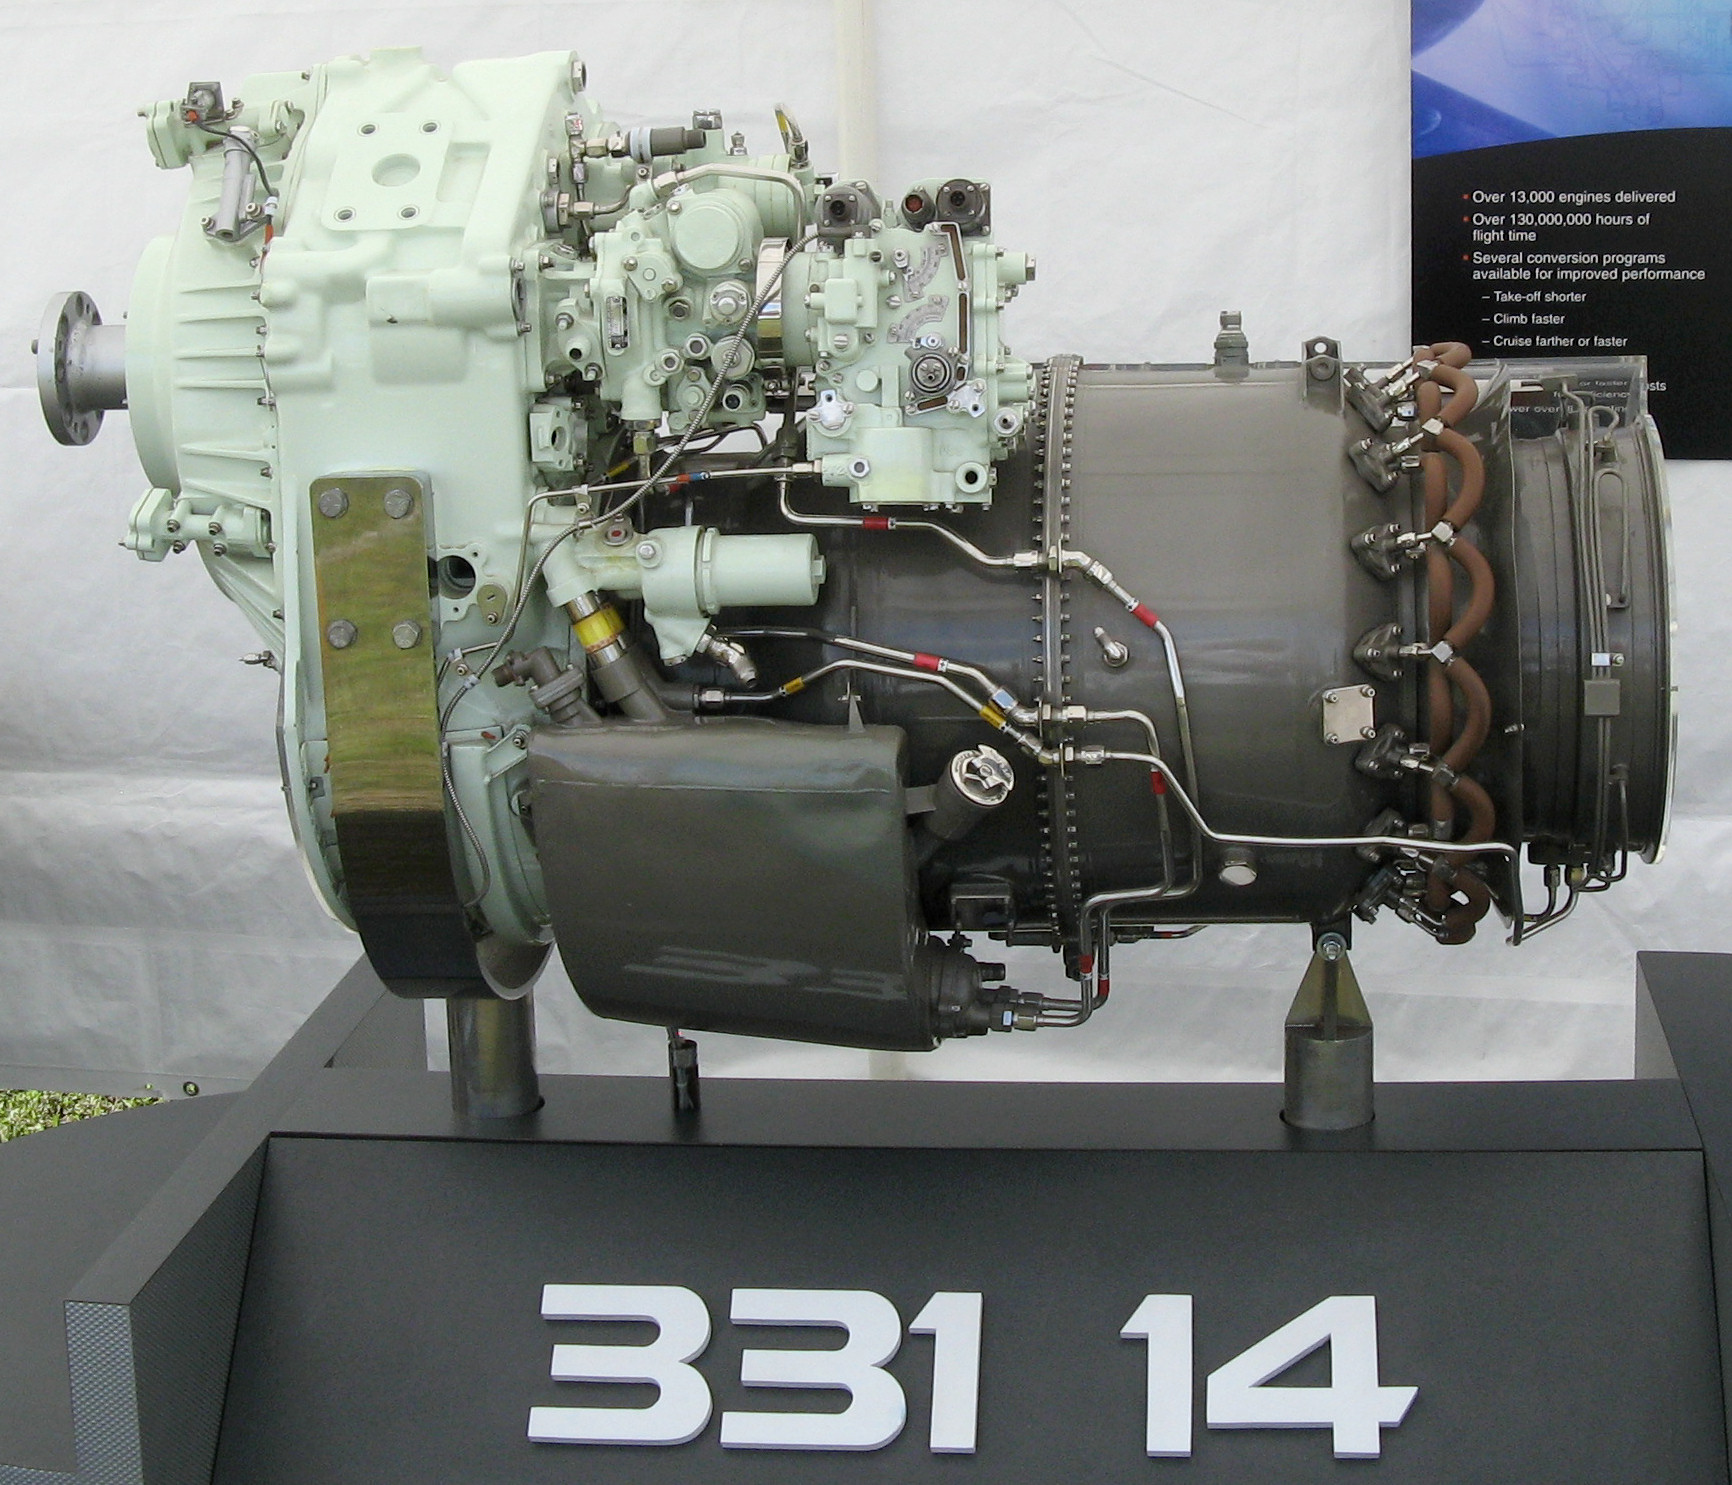 Двигатель Honeywell TPE331-10. Фото © Wikipedia